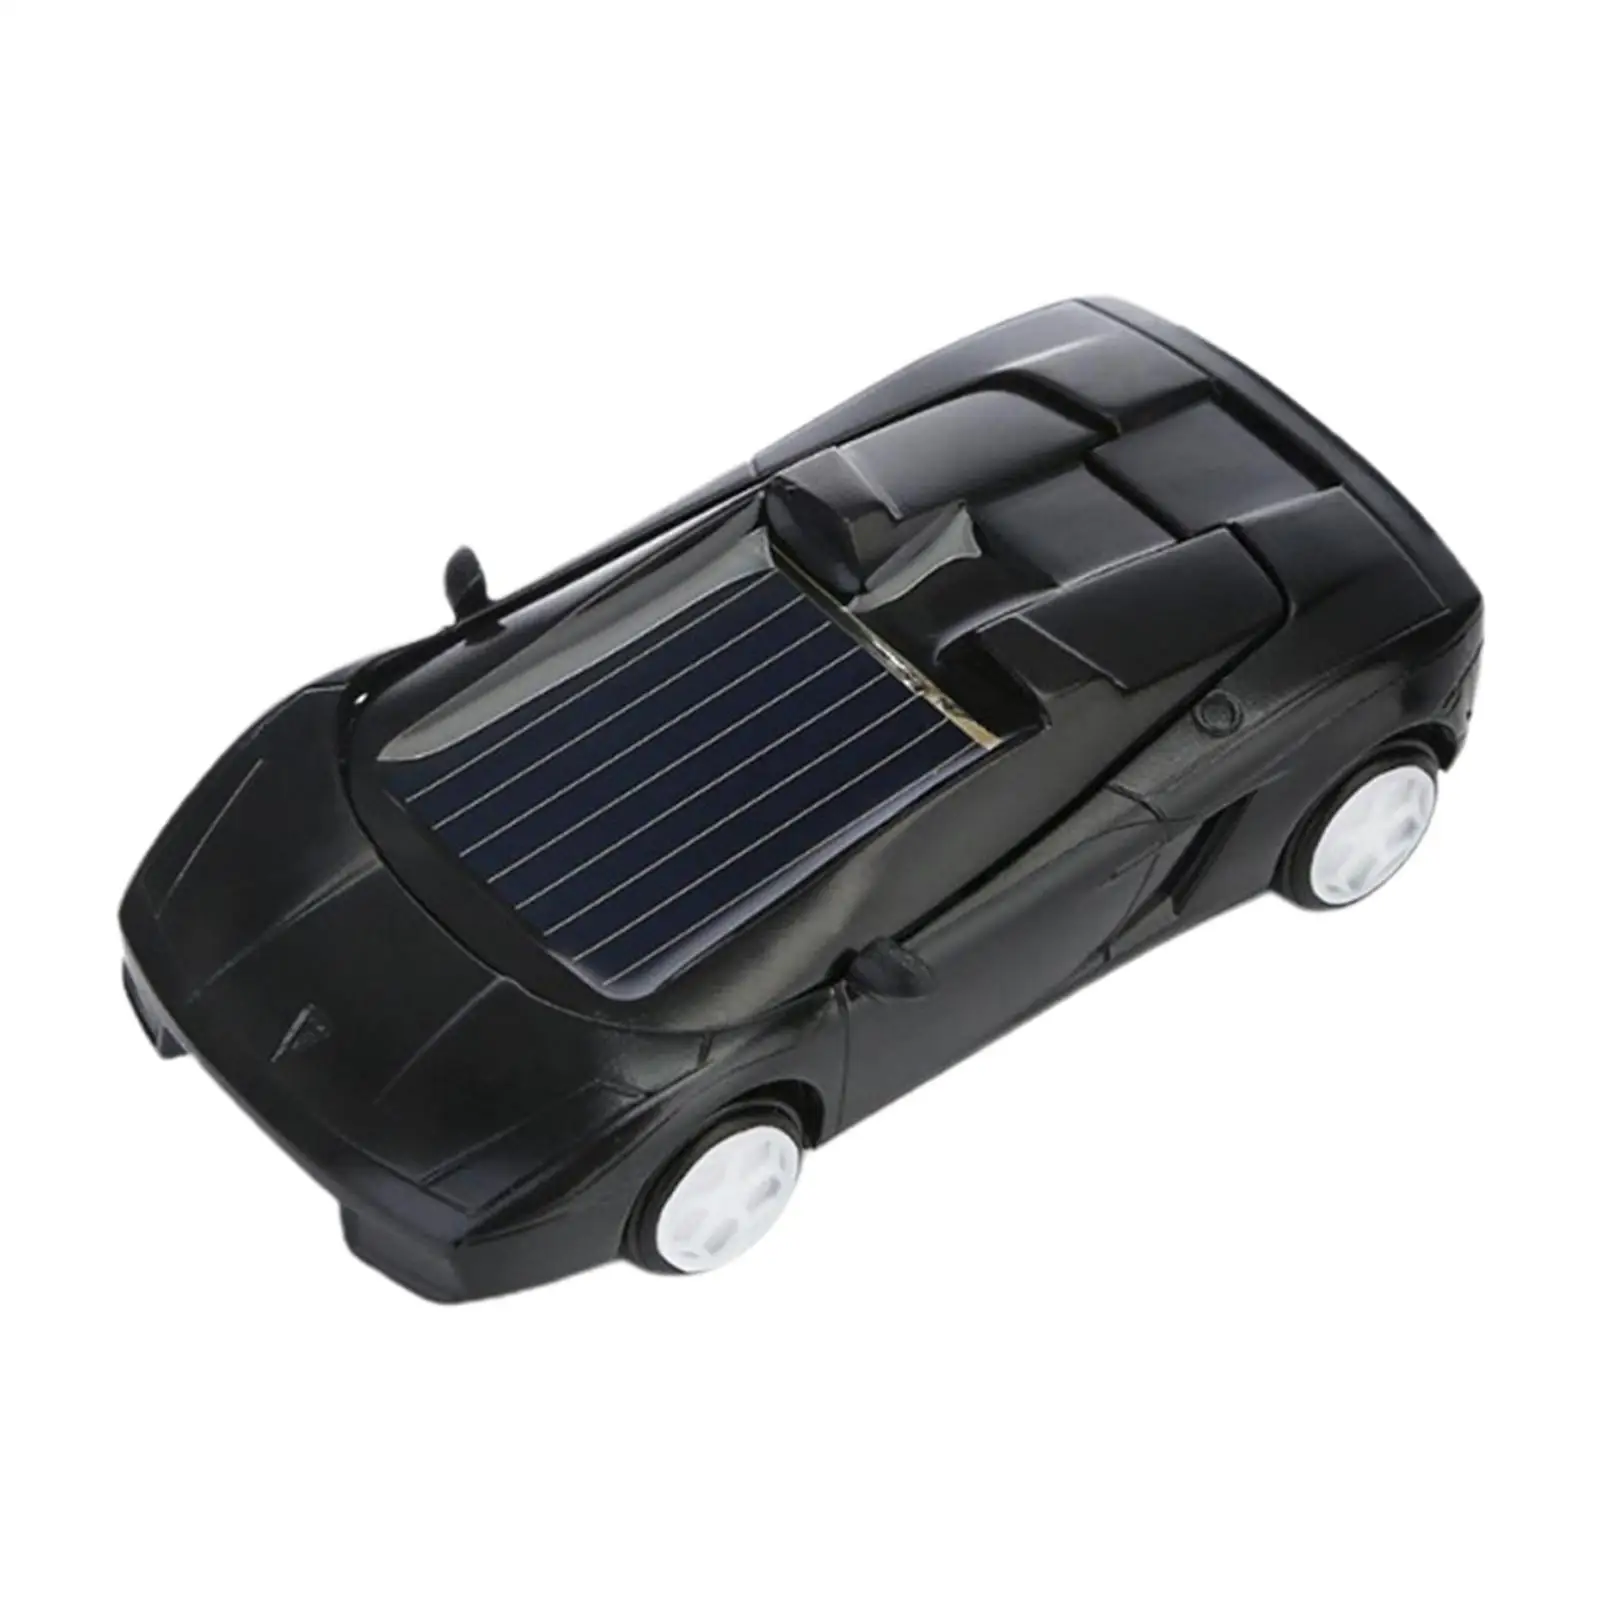 1 Piece Mini Plastic Portable Gadget Multifunction Collectible Vehicle Smallest